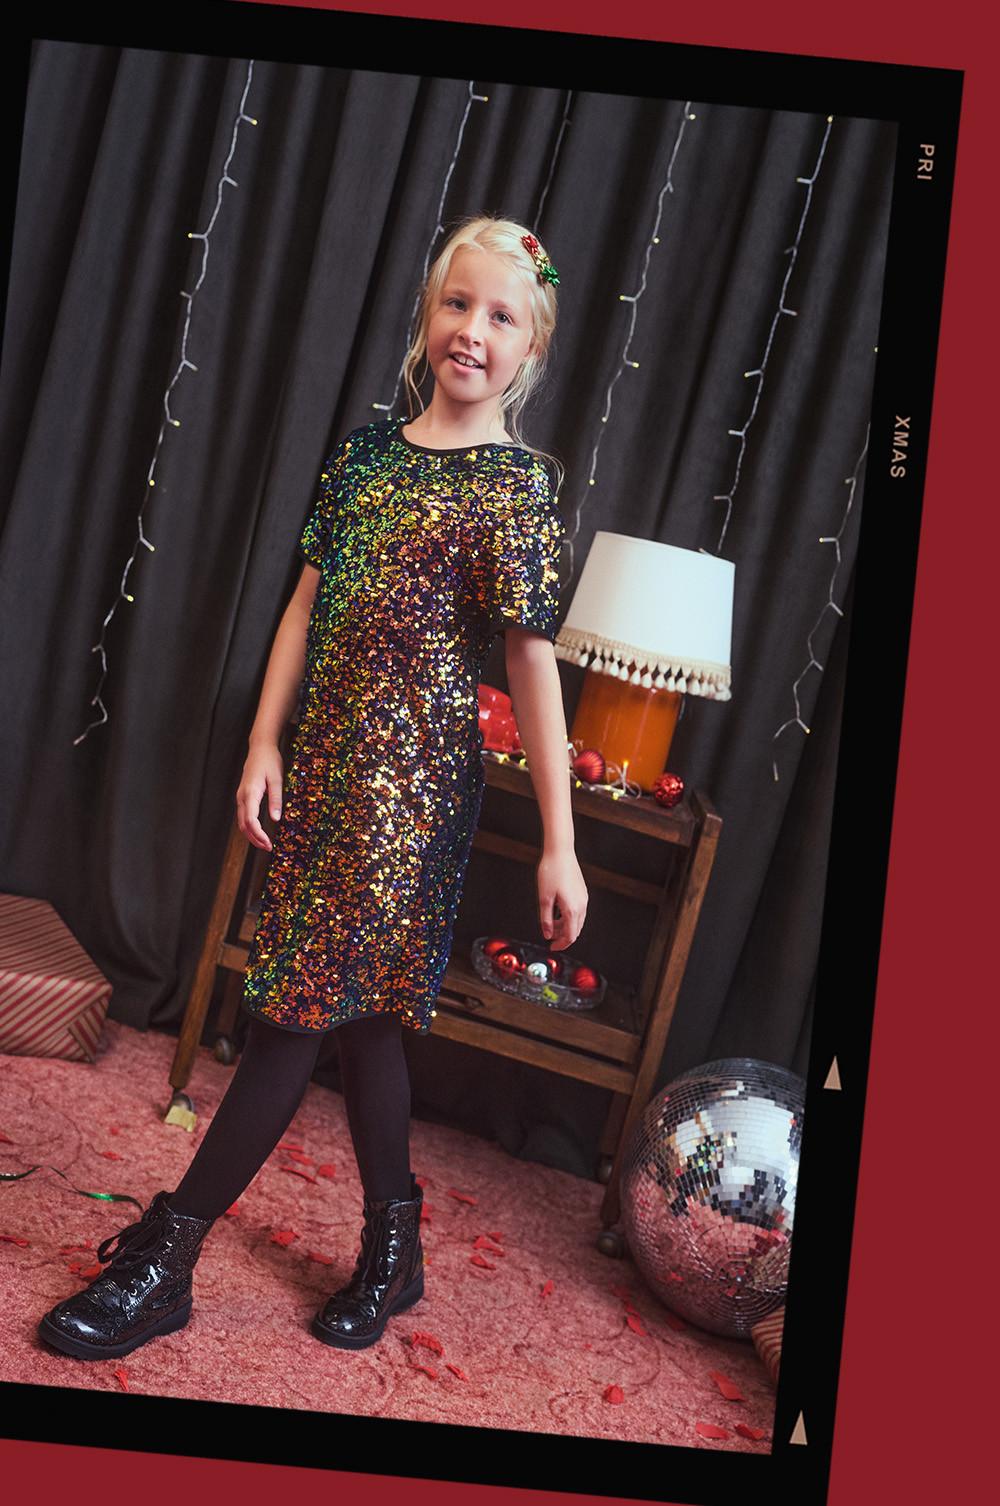 Child wears iridescent sequin dress